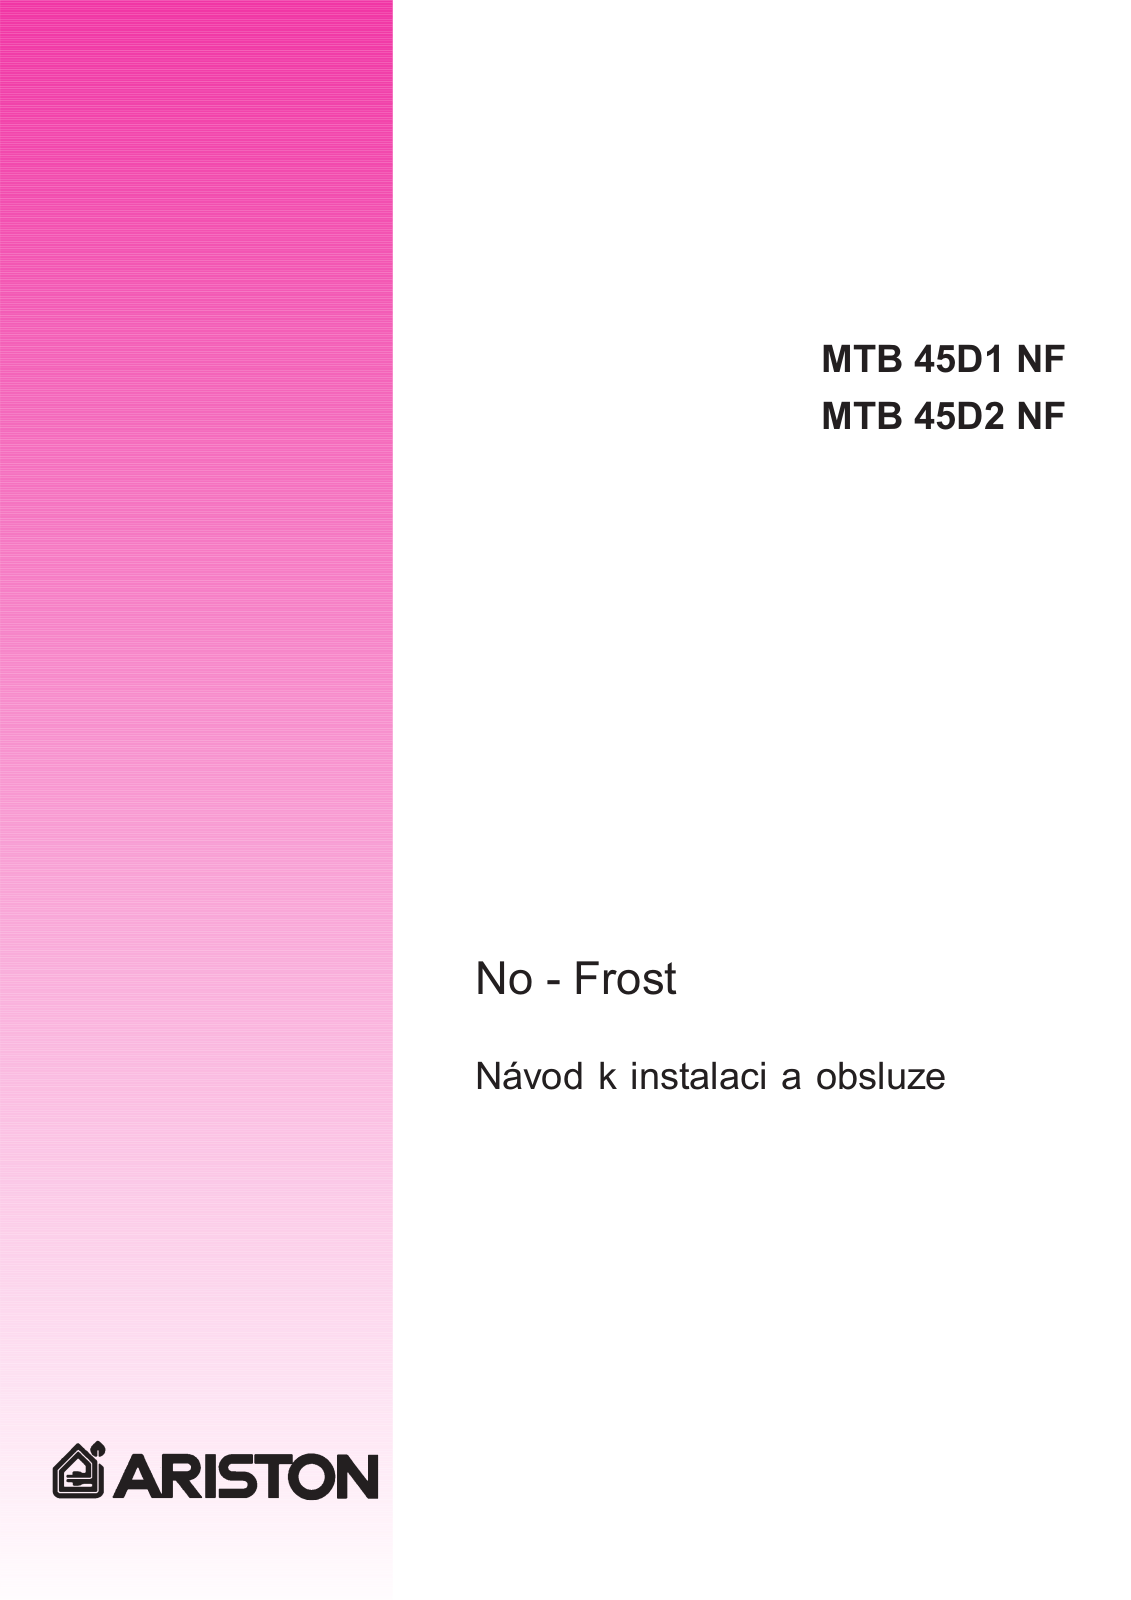 Hotpoint-Ariston MTB 45 D2 NF, MTB 45 D1 NF Manual